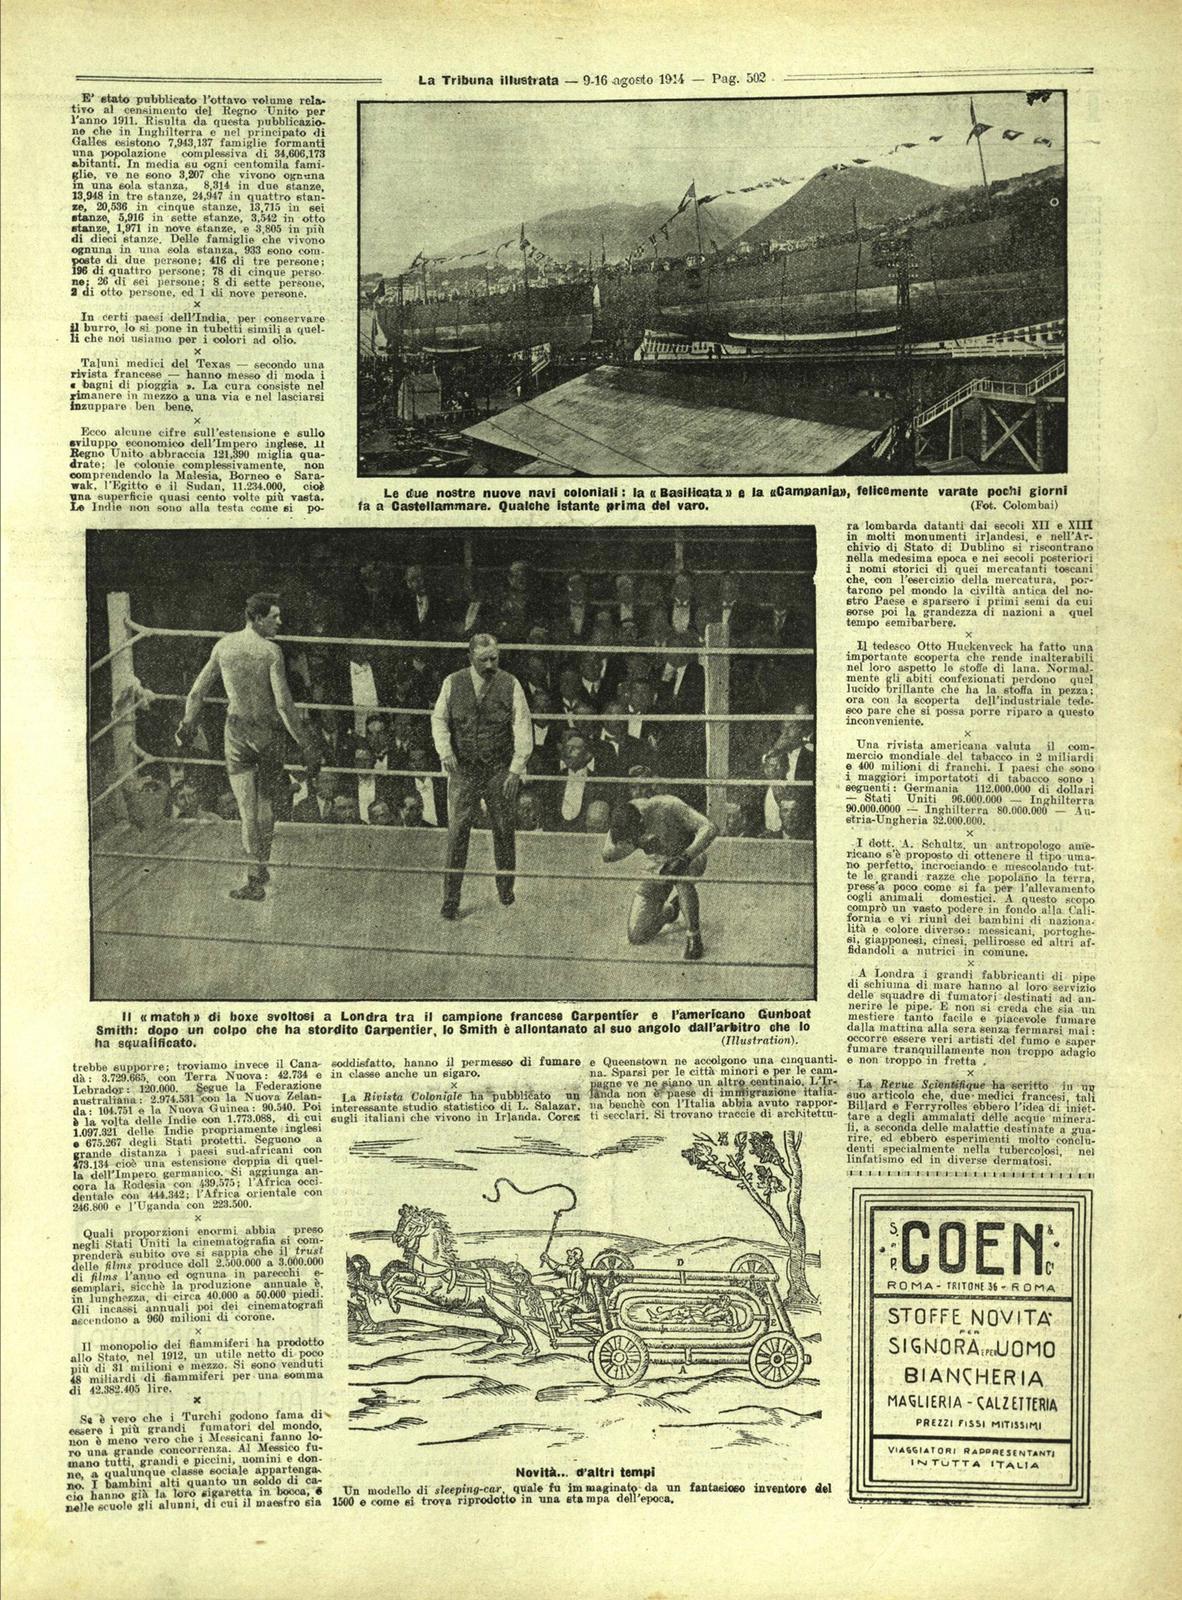 La Tribuna Illustrata, 9-16 Agosto 1914